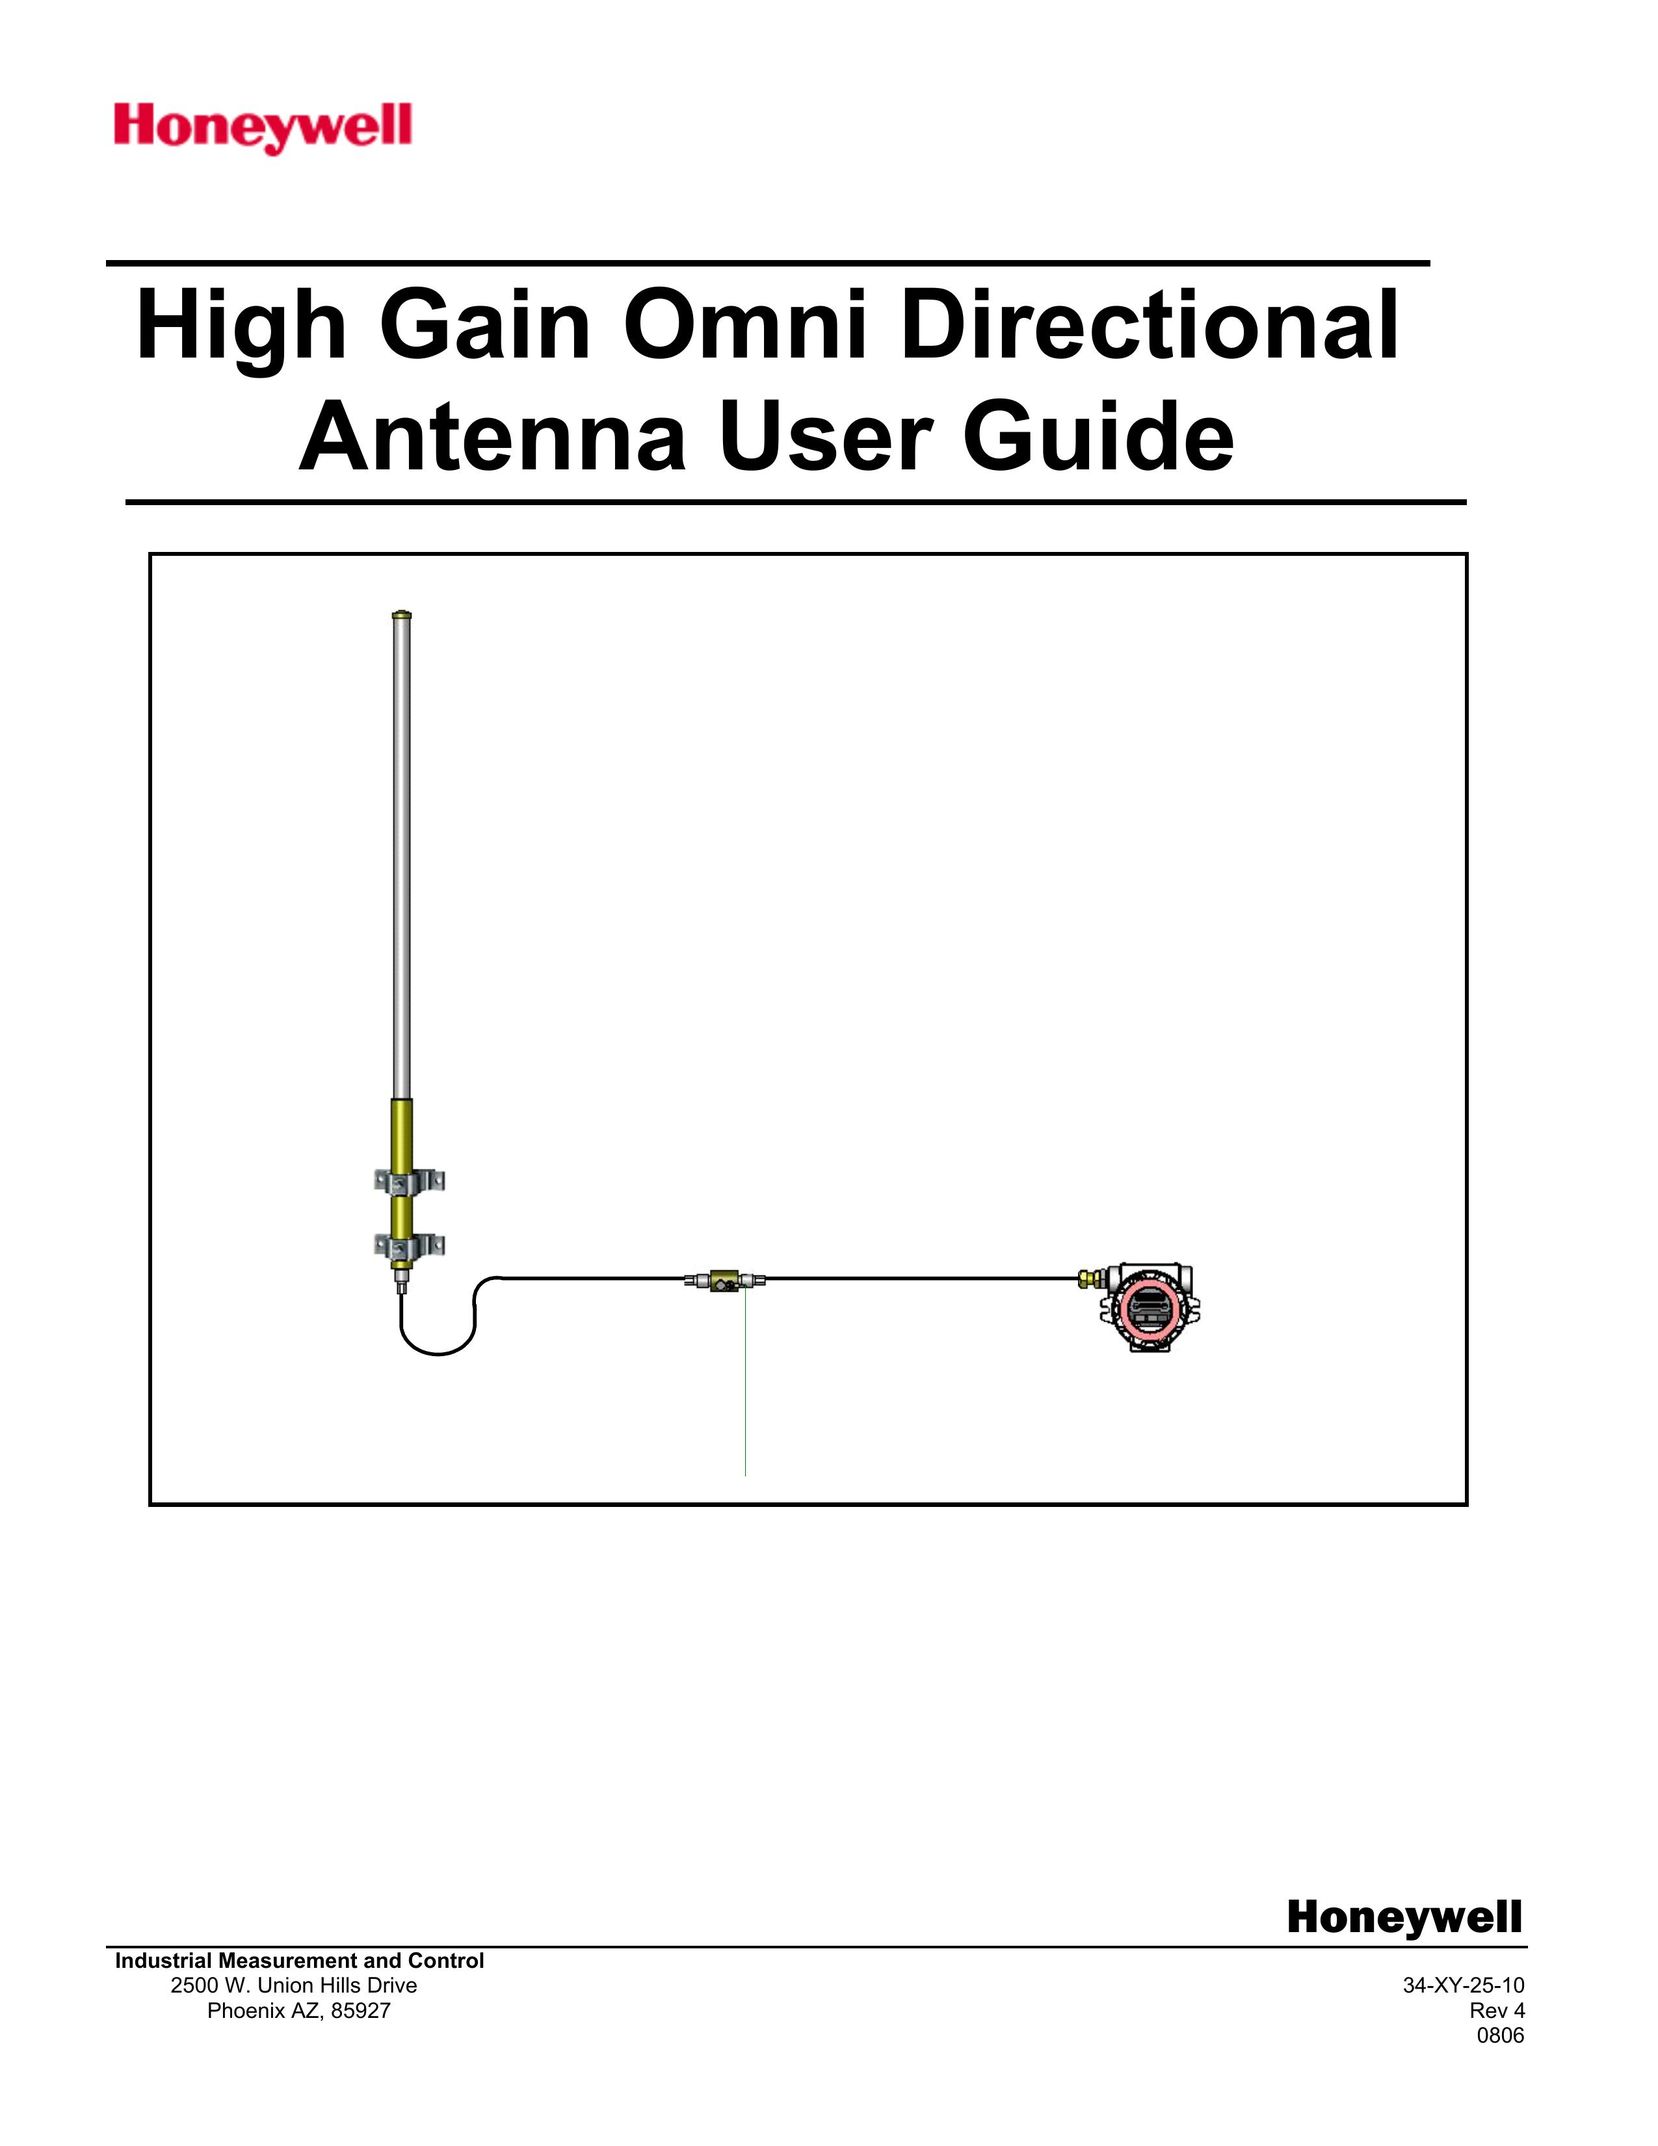 Honeywell High Gain Omni Directional Antenna Stereo System User Manual